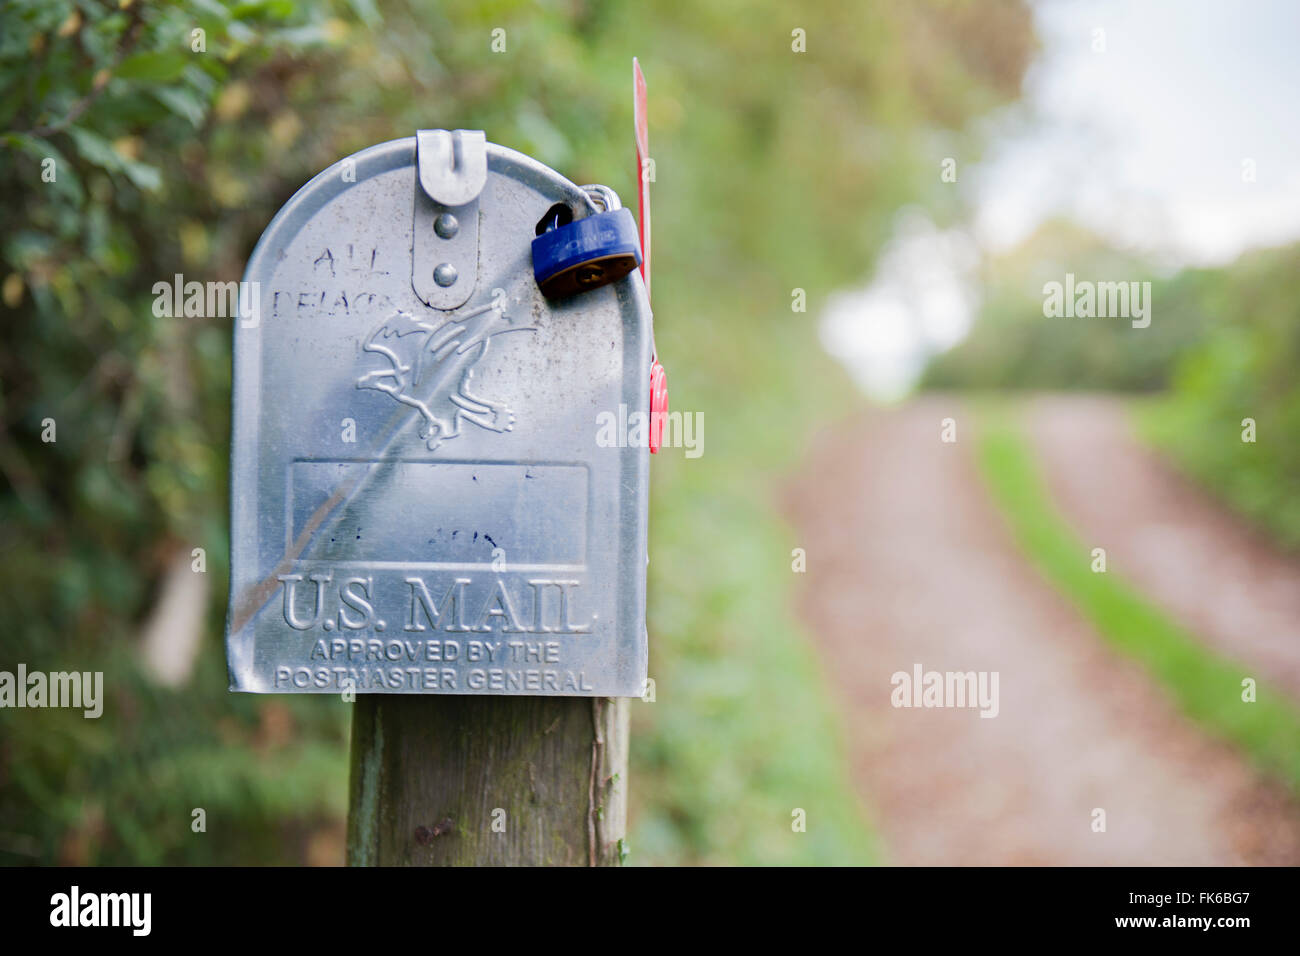 US Mail post box, United Kingdom, Europe Stock Photo